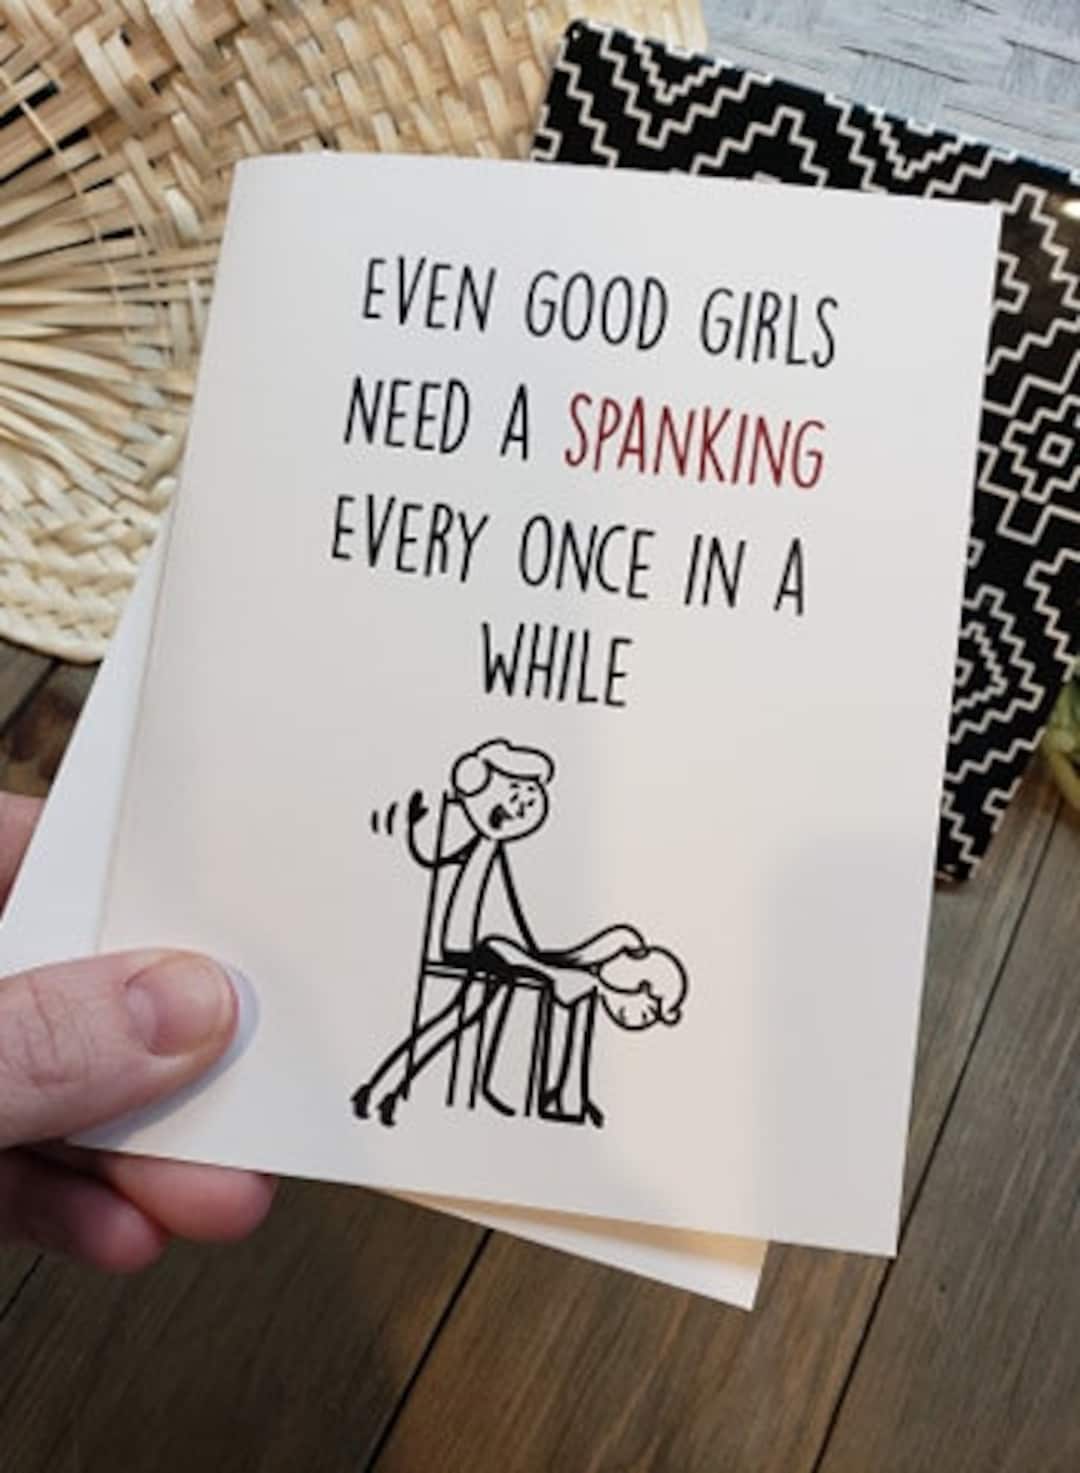 donald minott share girls who like spankings photos